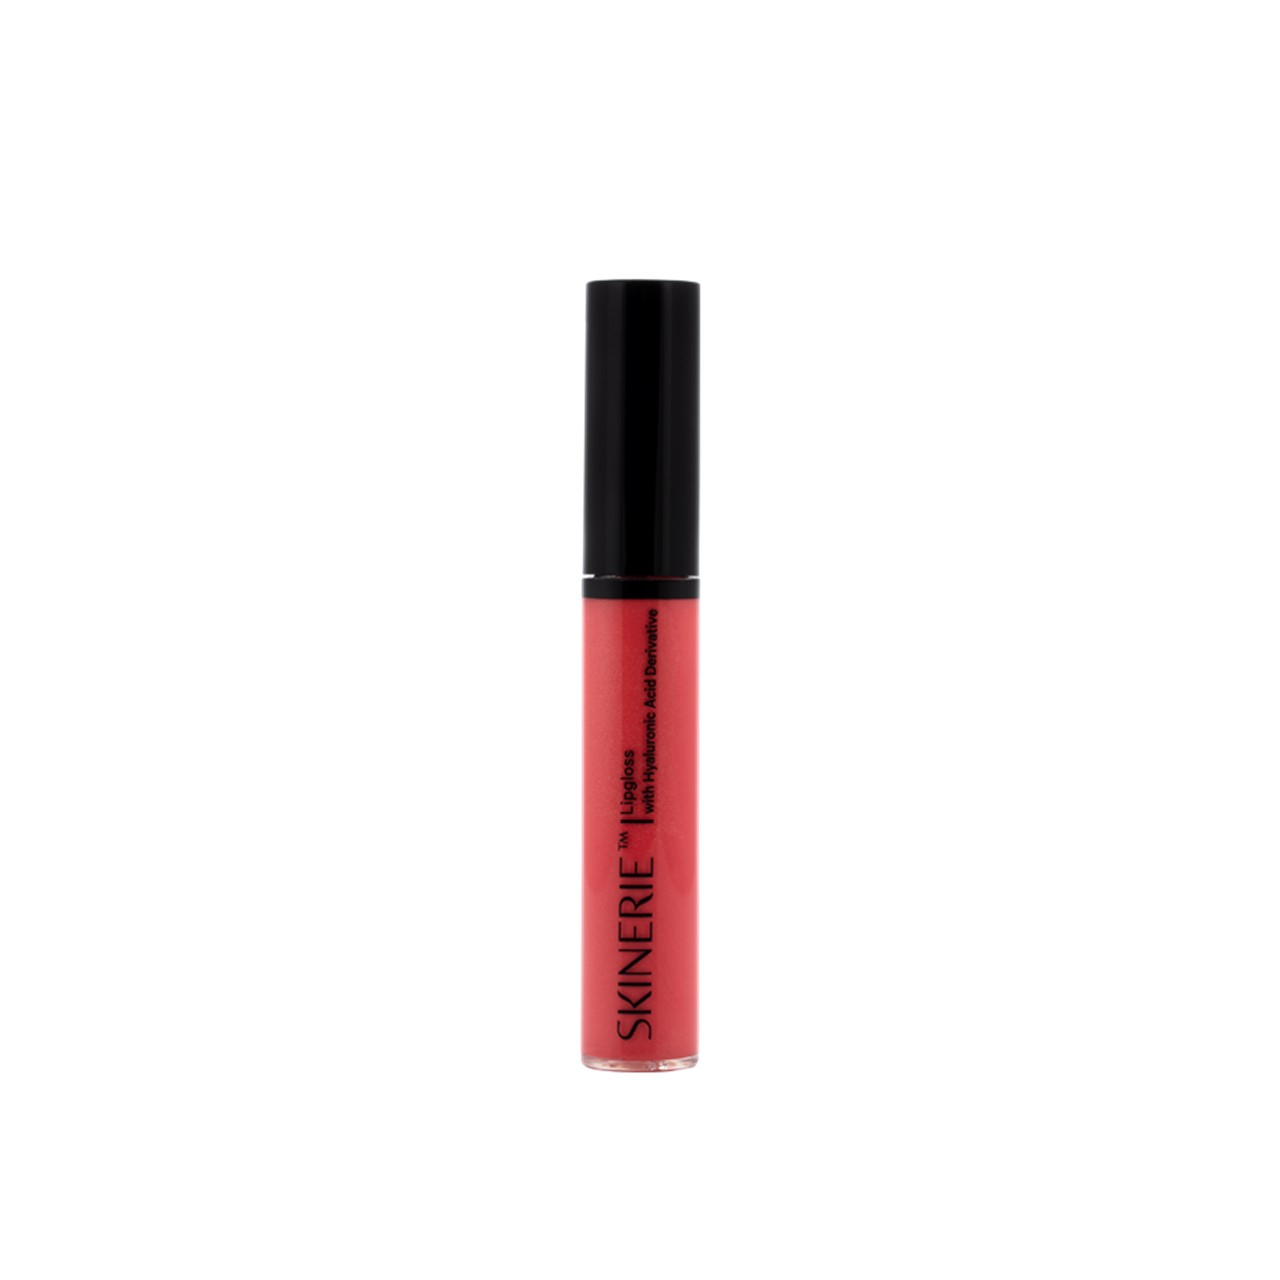 Skinerie Lips Lip Gloss 03 Coral 9ml (0.30fl oz)